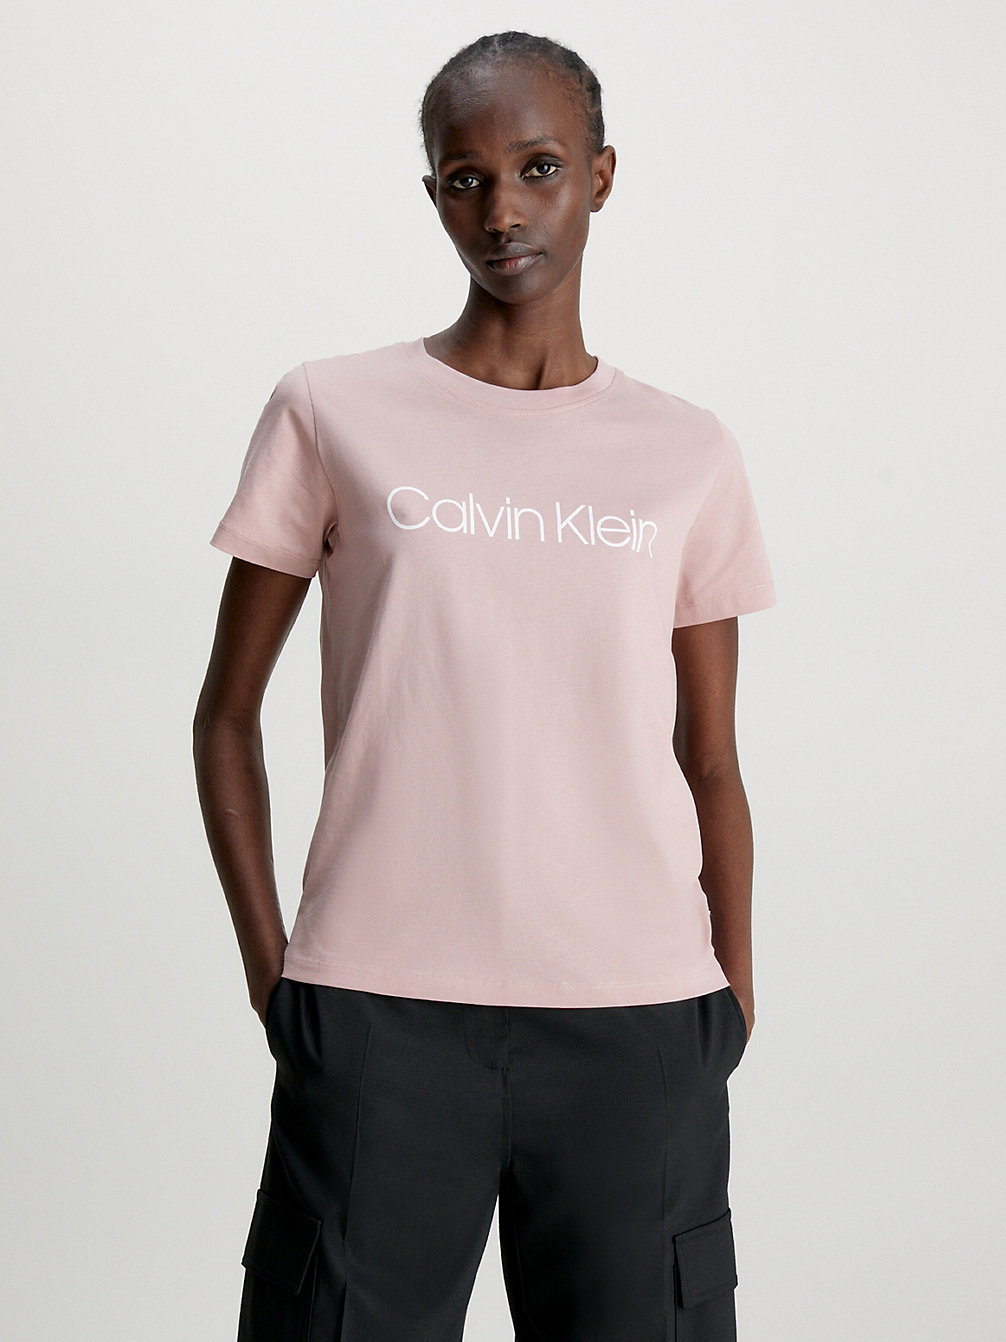 T-Shirt En Coton Bio Avec Logo > MUTED PINK > undefined femmes > Calvin Klein